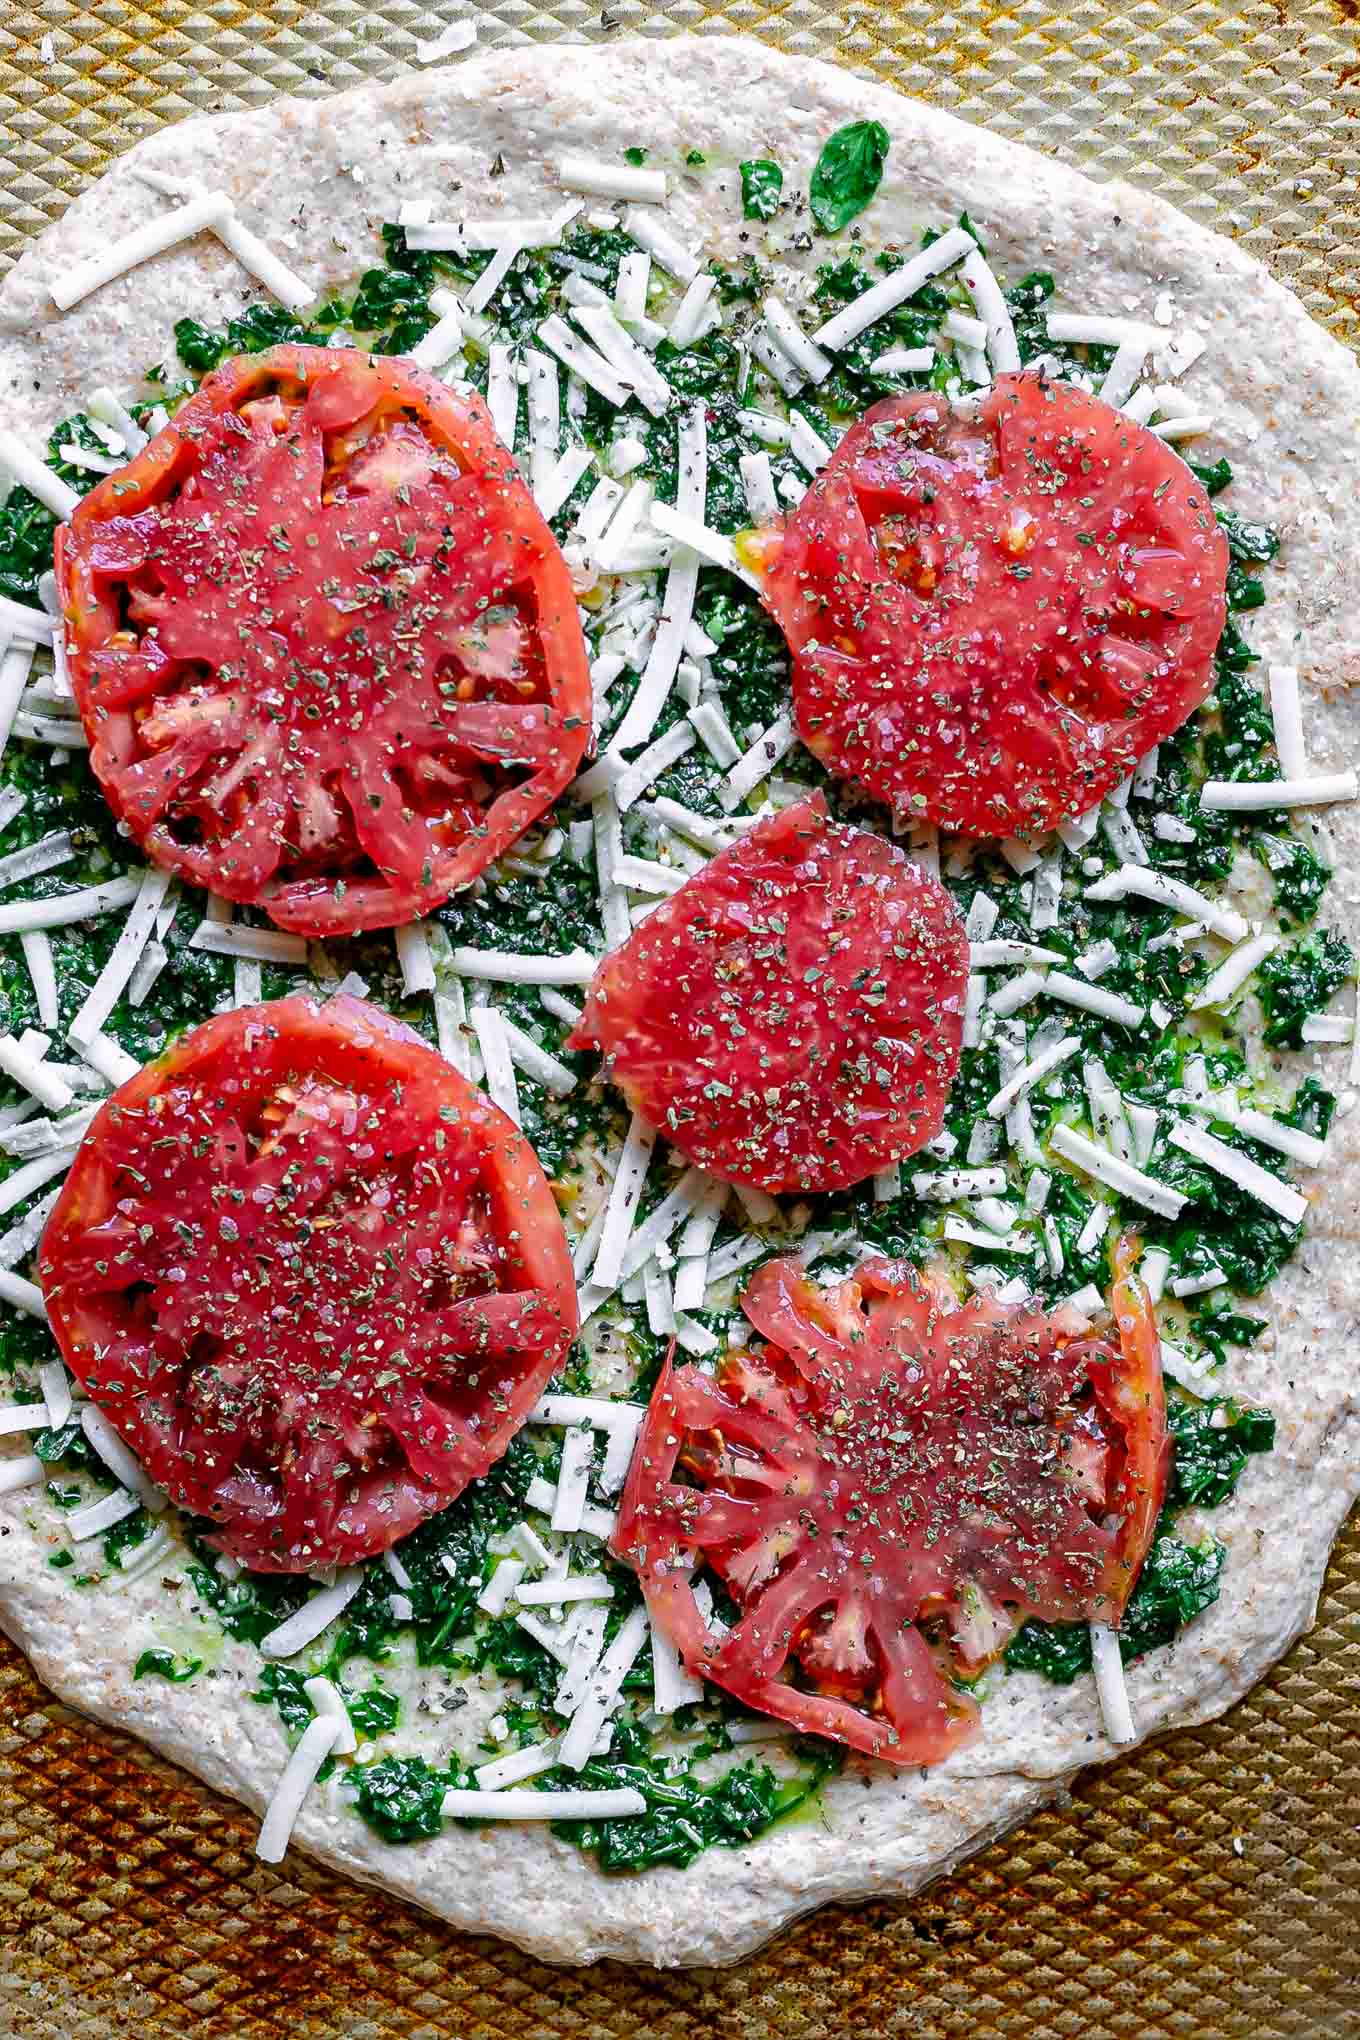 pizza dough with pesto, mozzarella cheese, and tomato slices on a baking sheet before baking